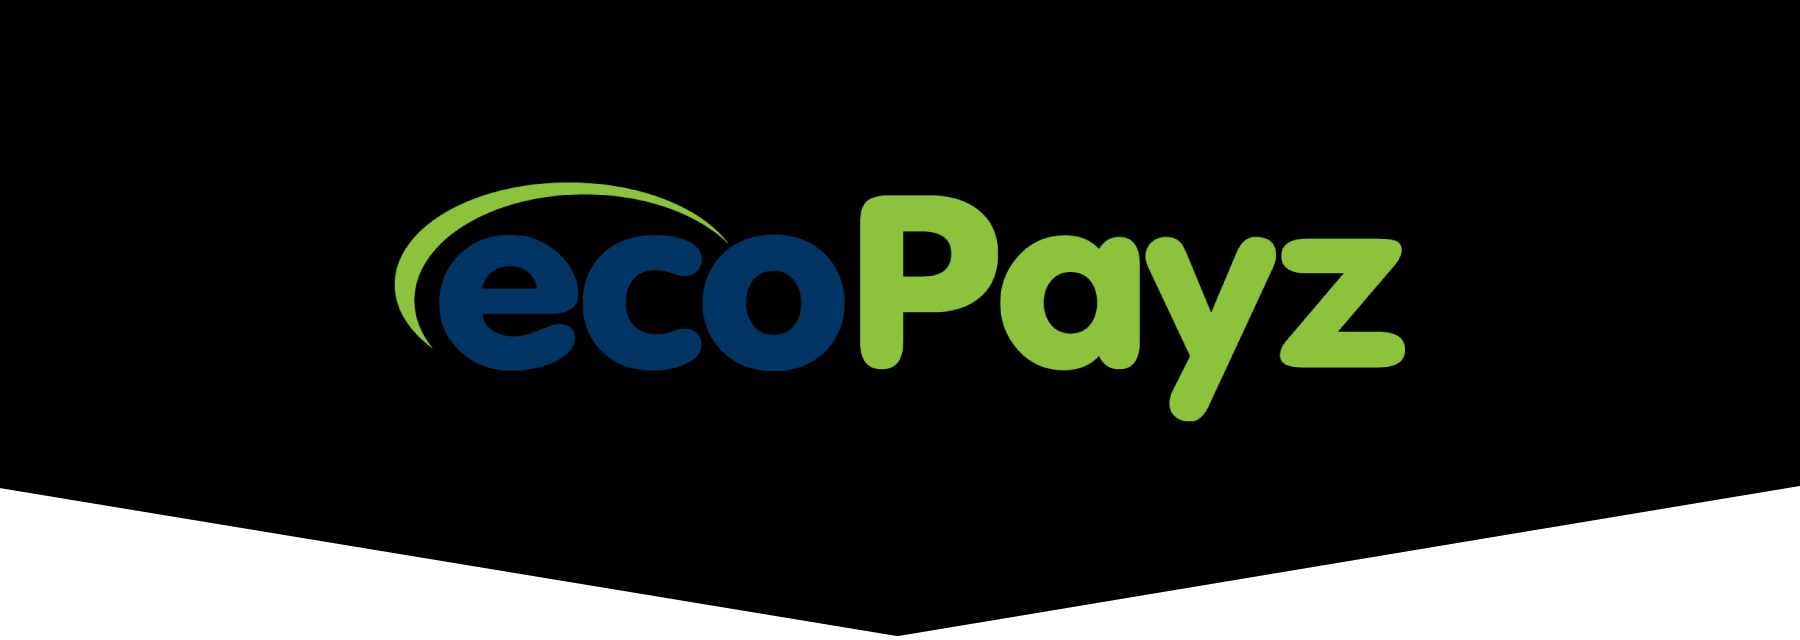 ecoPayz-online-canada-casino-payment